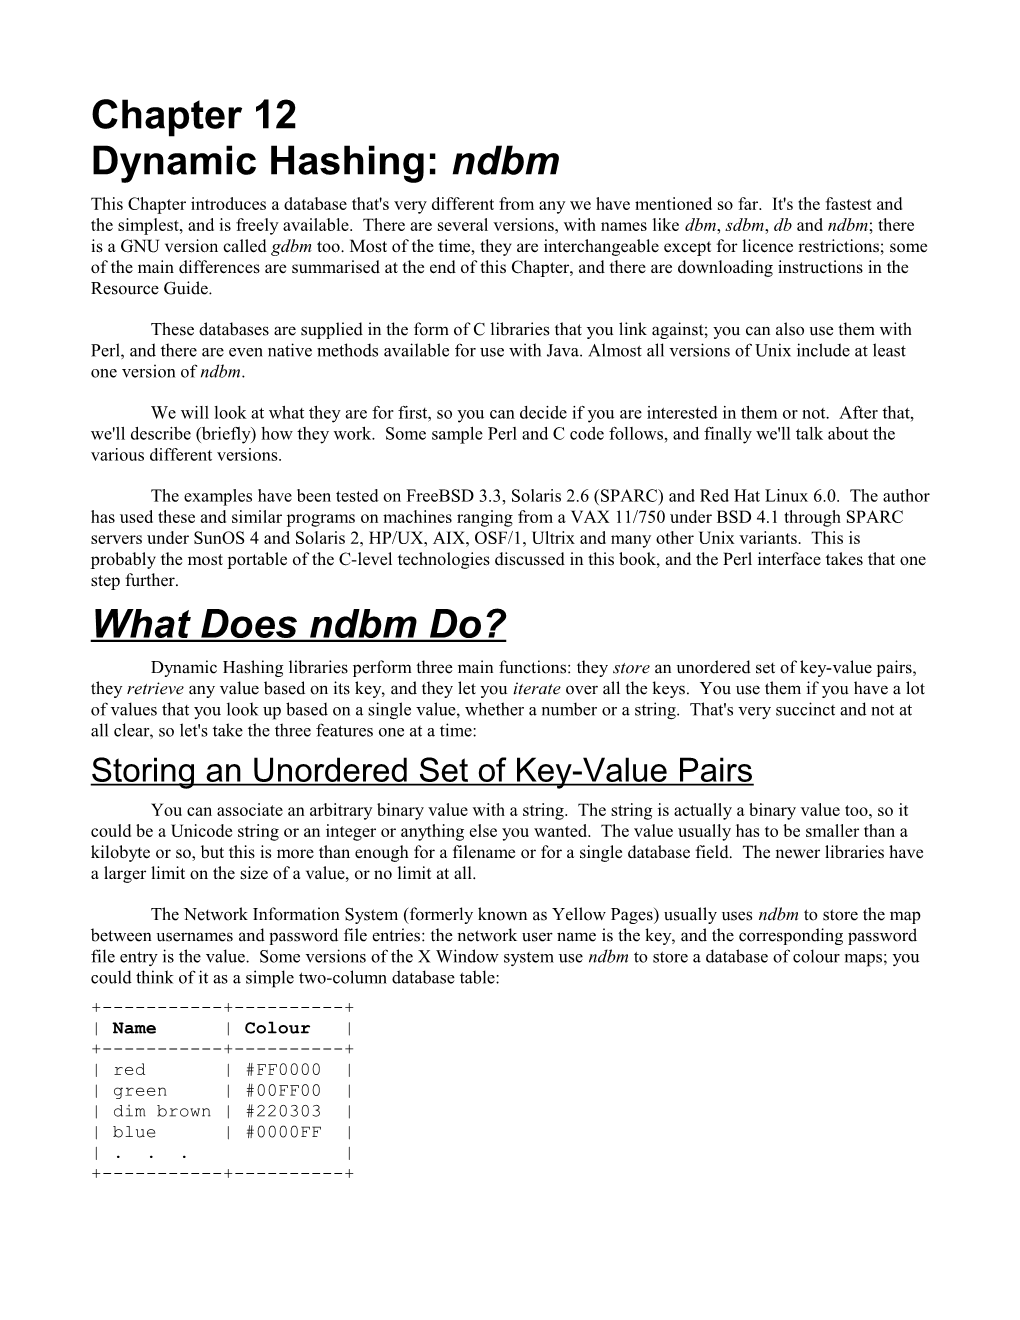 Dynamic Hashing: Ndbm